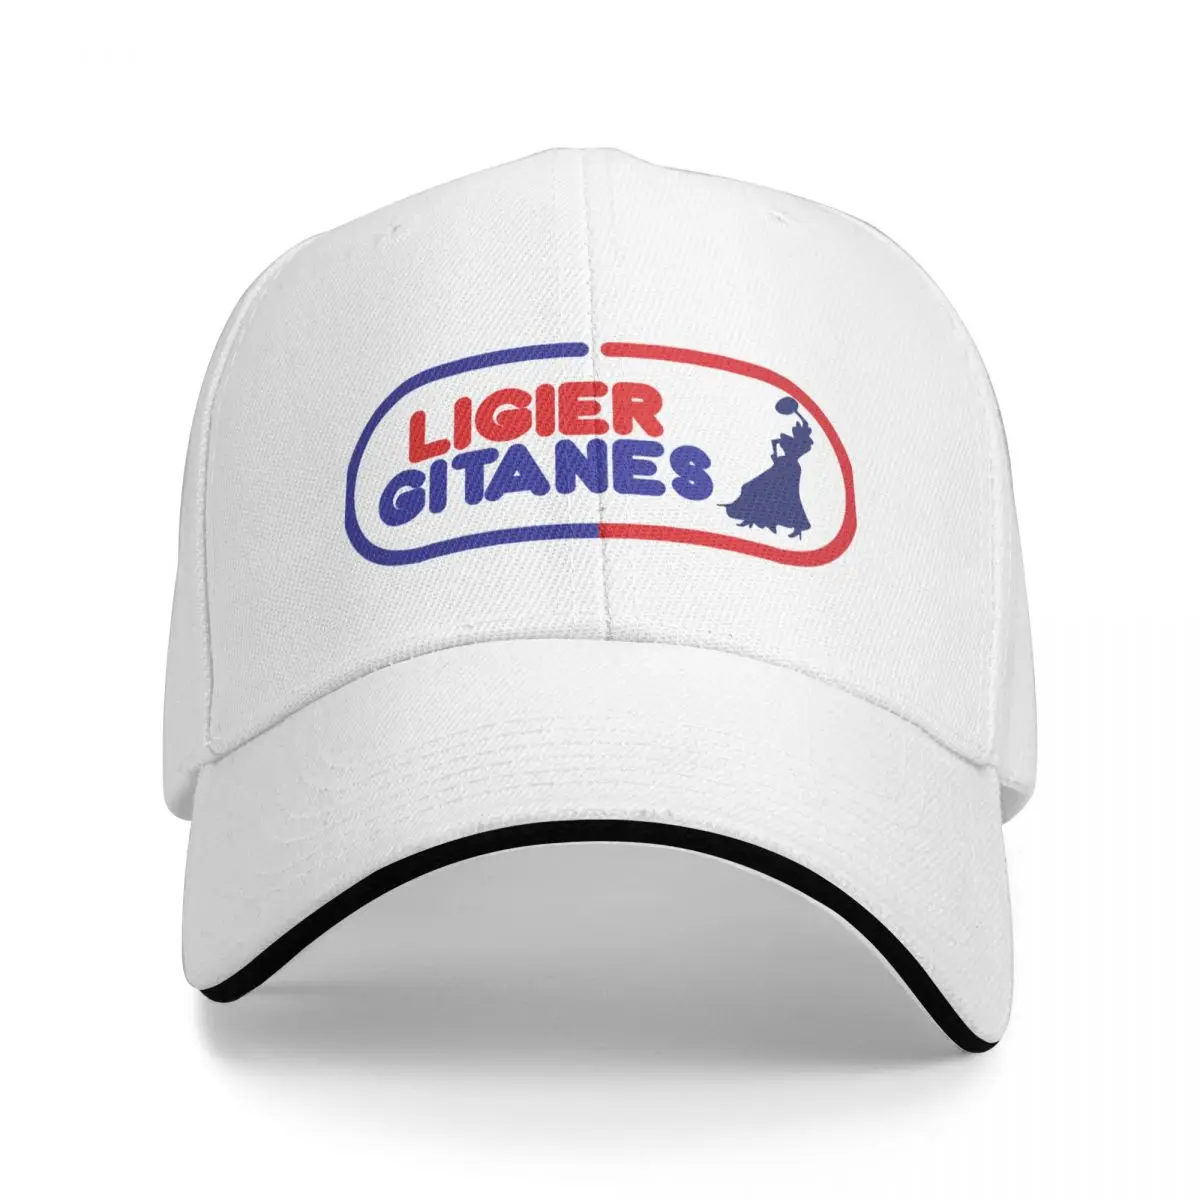 Ligier Gitanes Logotipo Gorra de Béisbol Sombrero de Sol Para Niños Caballo Sombrero de los Hombres Gorras de Mujer . ' - ' . 0